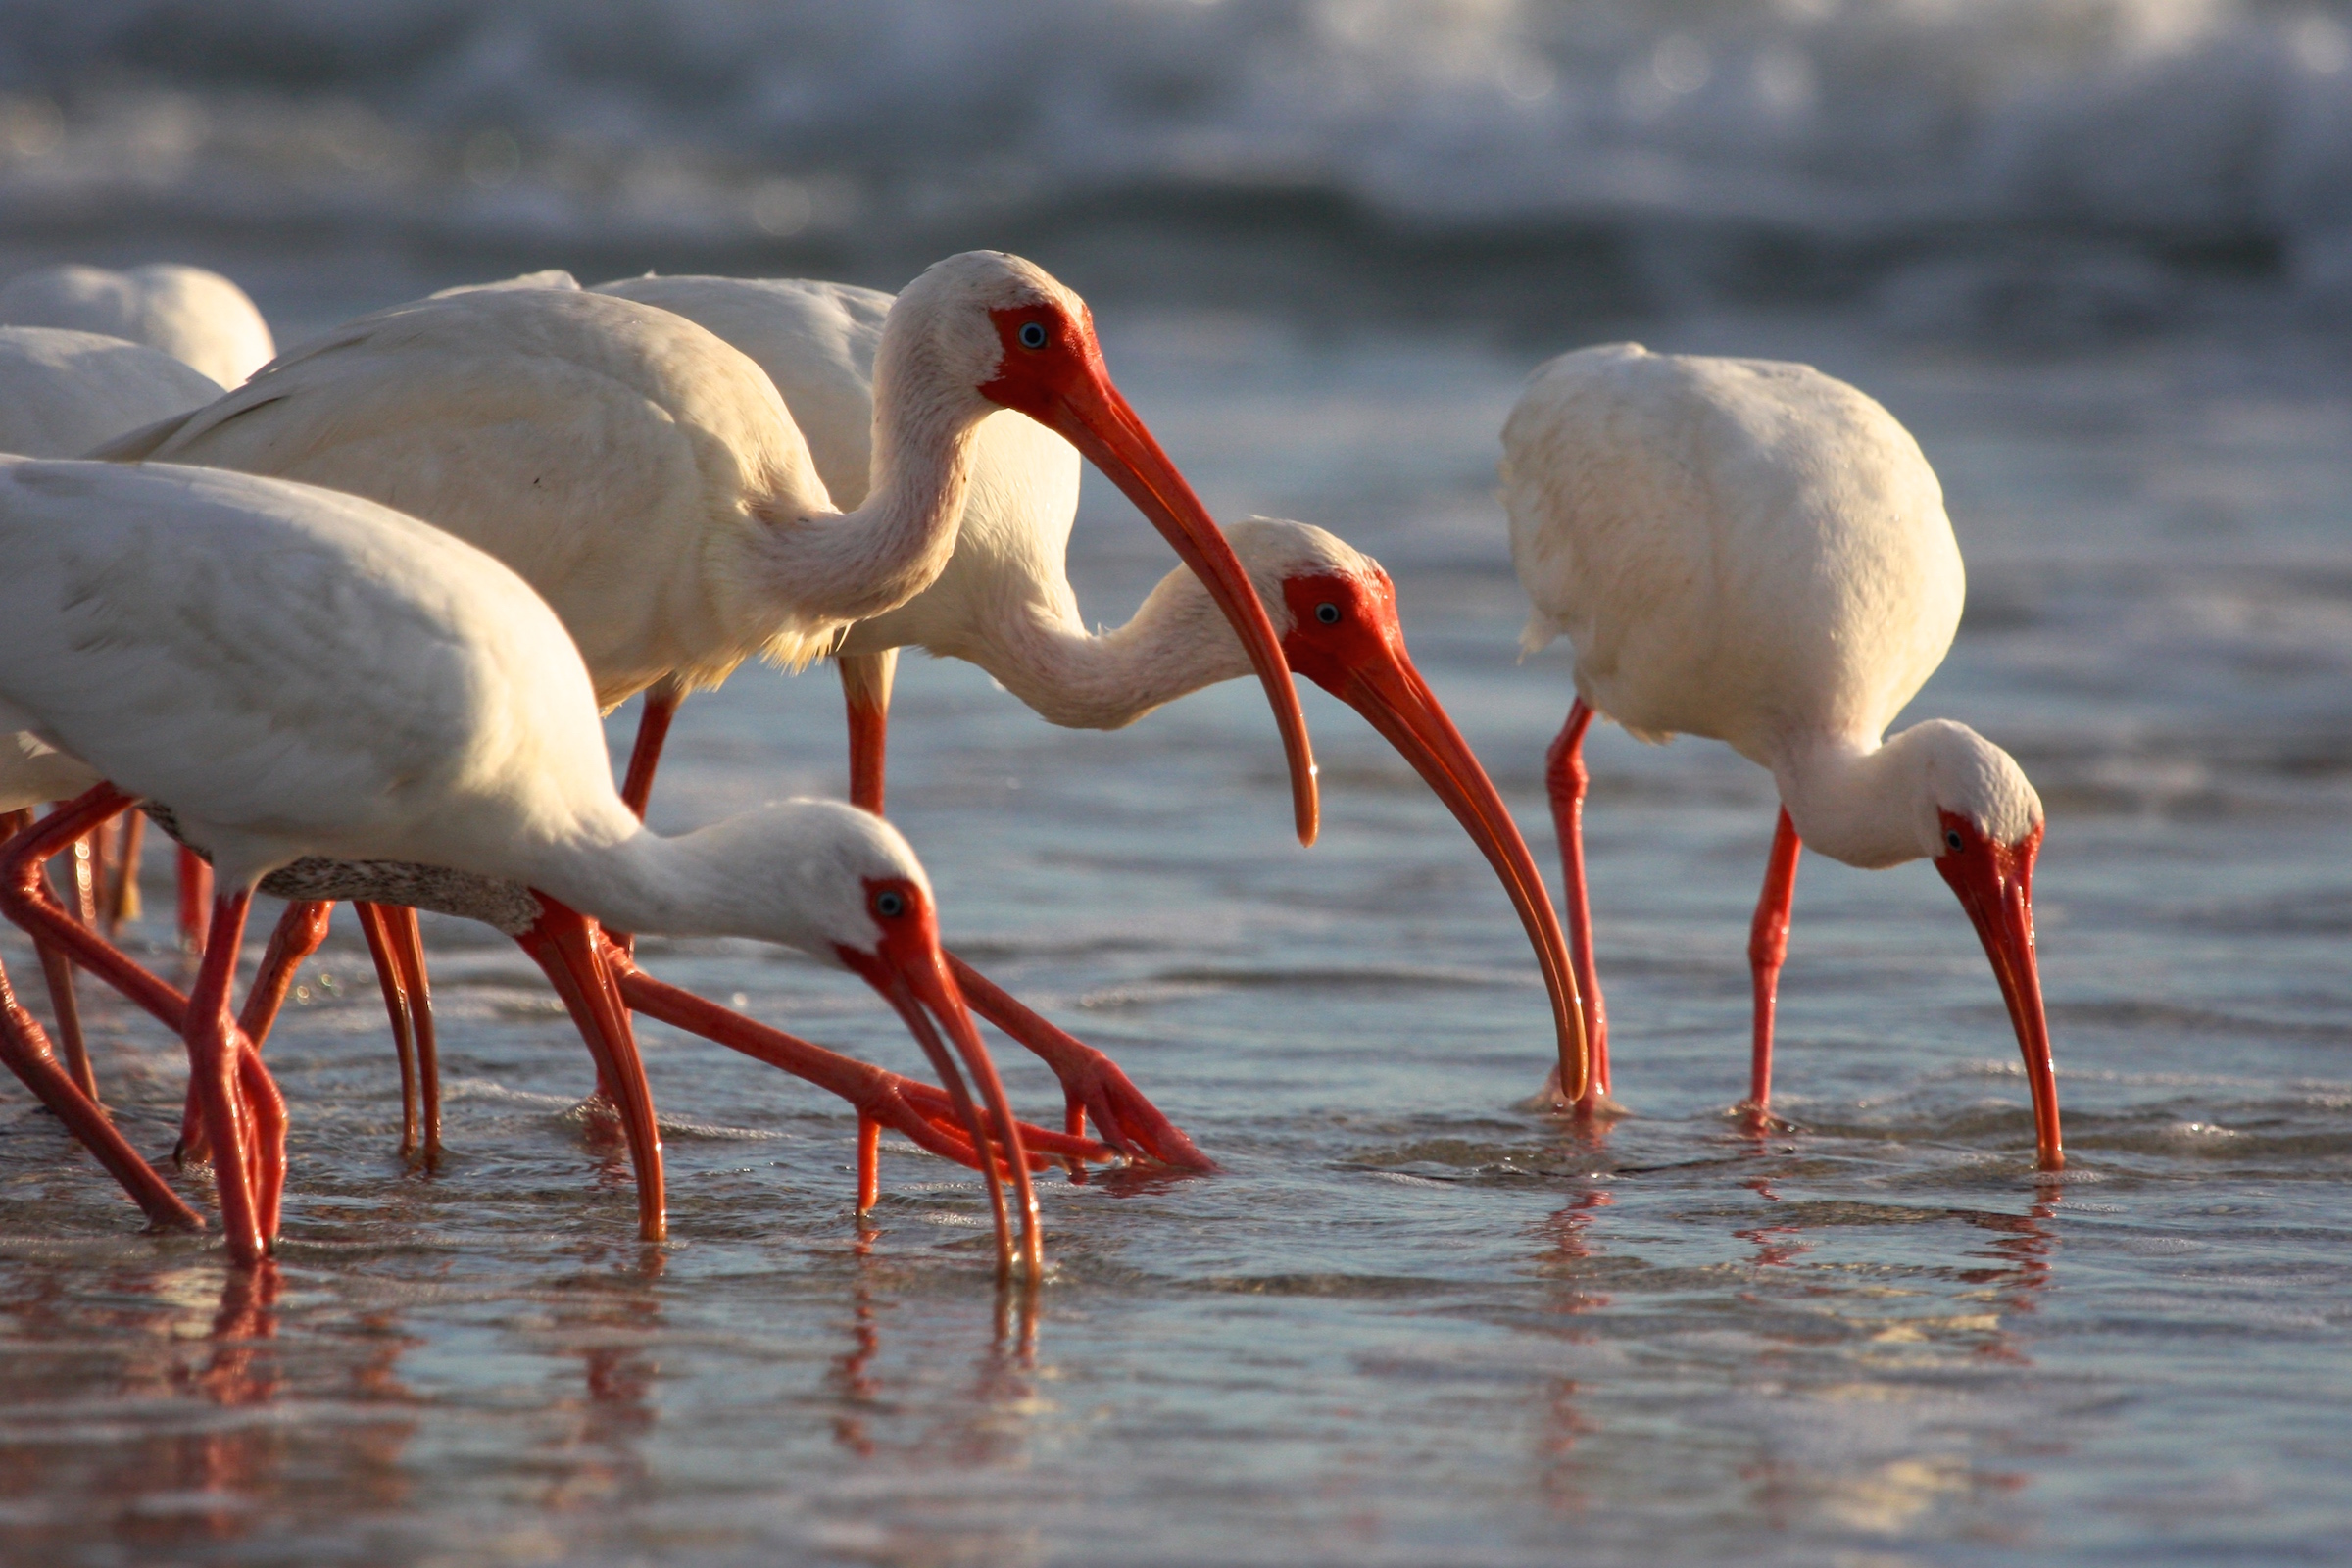 White ibises feeding along a beach.